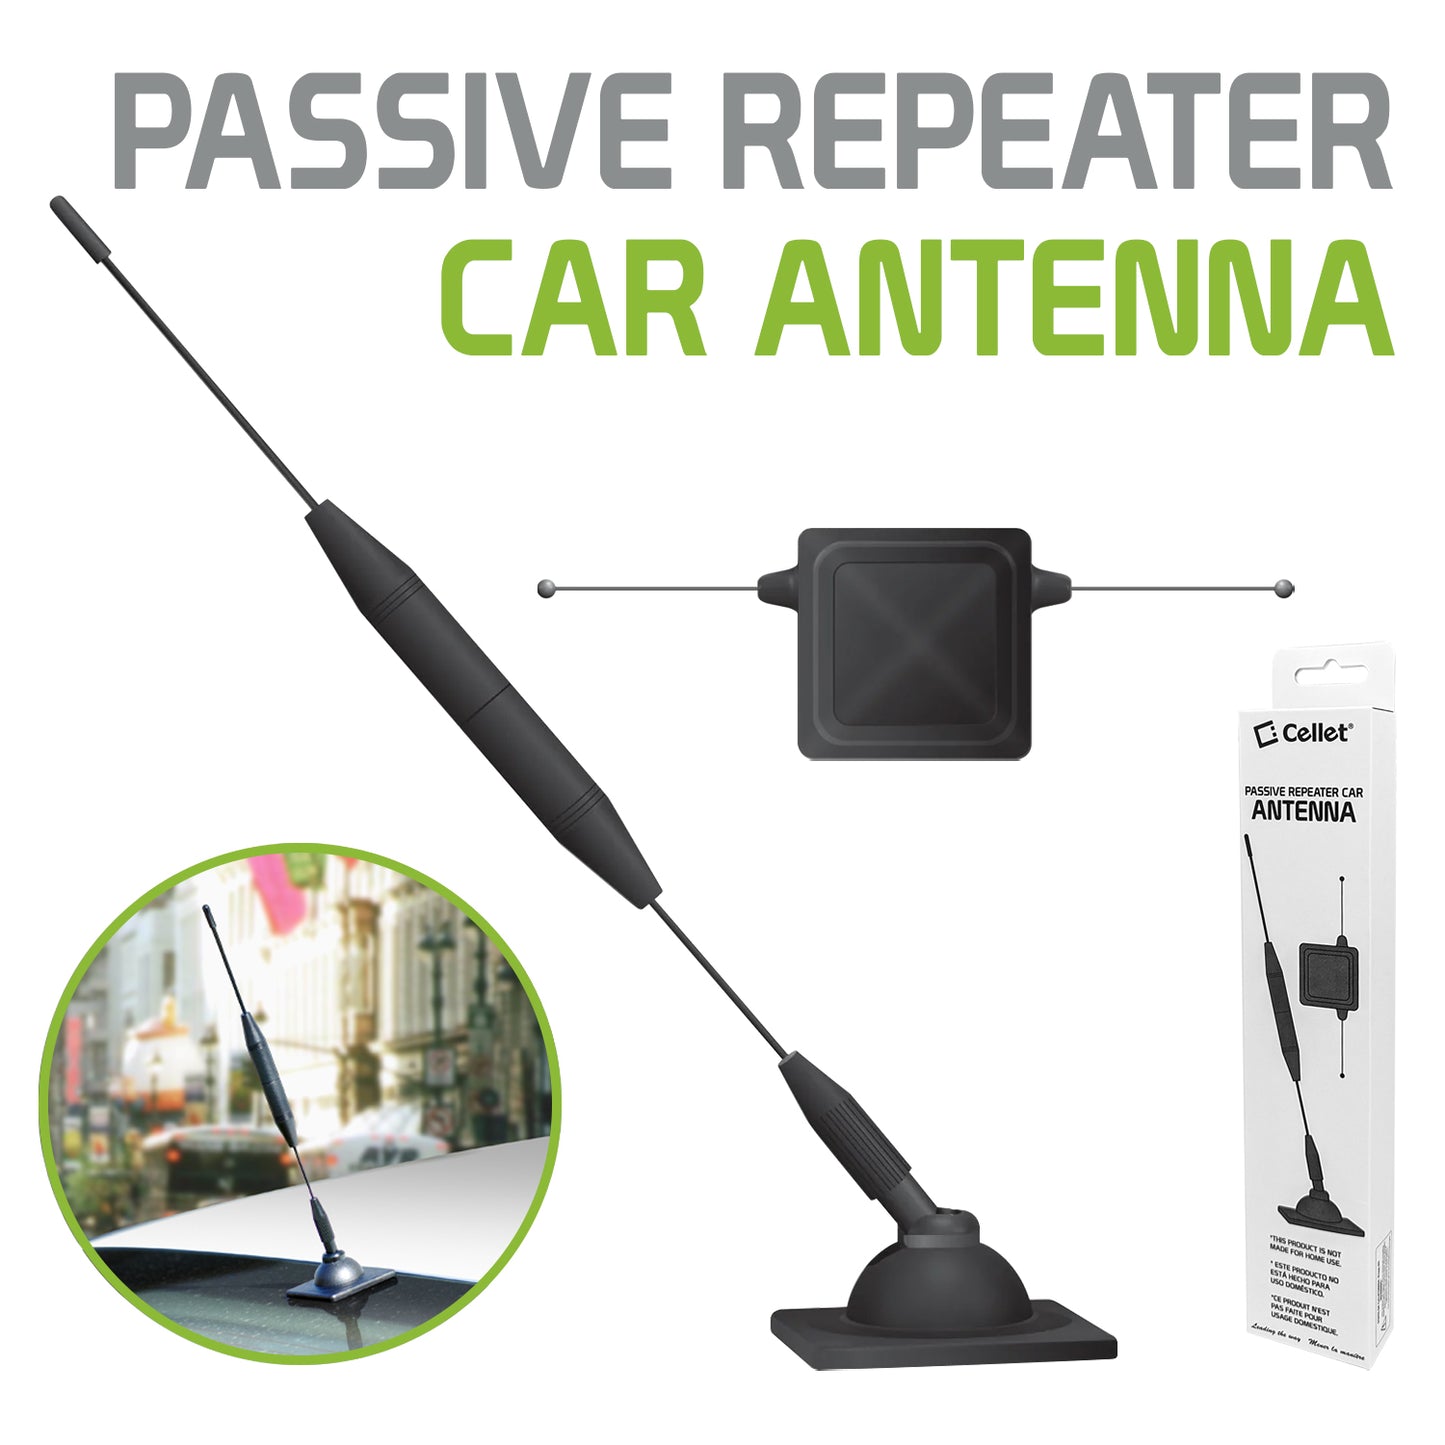 Car Antenna, Cellet Cellphone Car Mount Passive Repeater Antenna